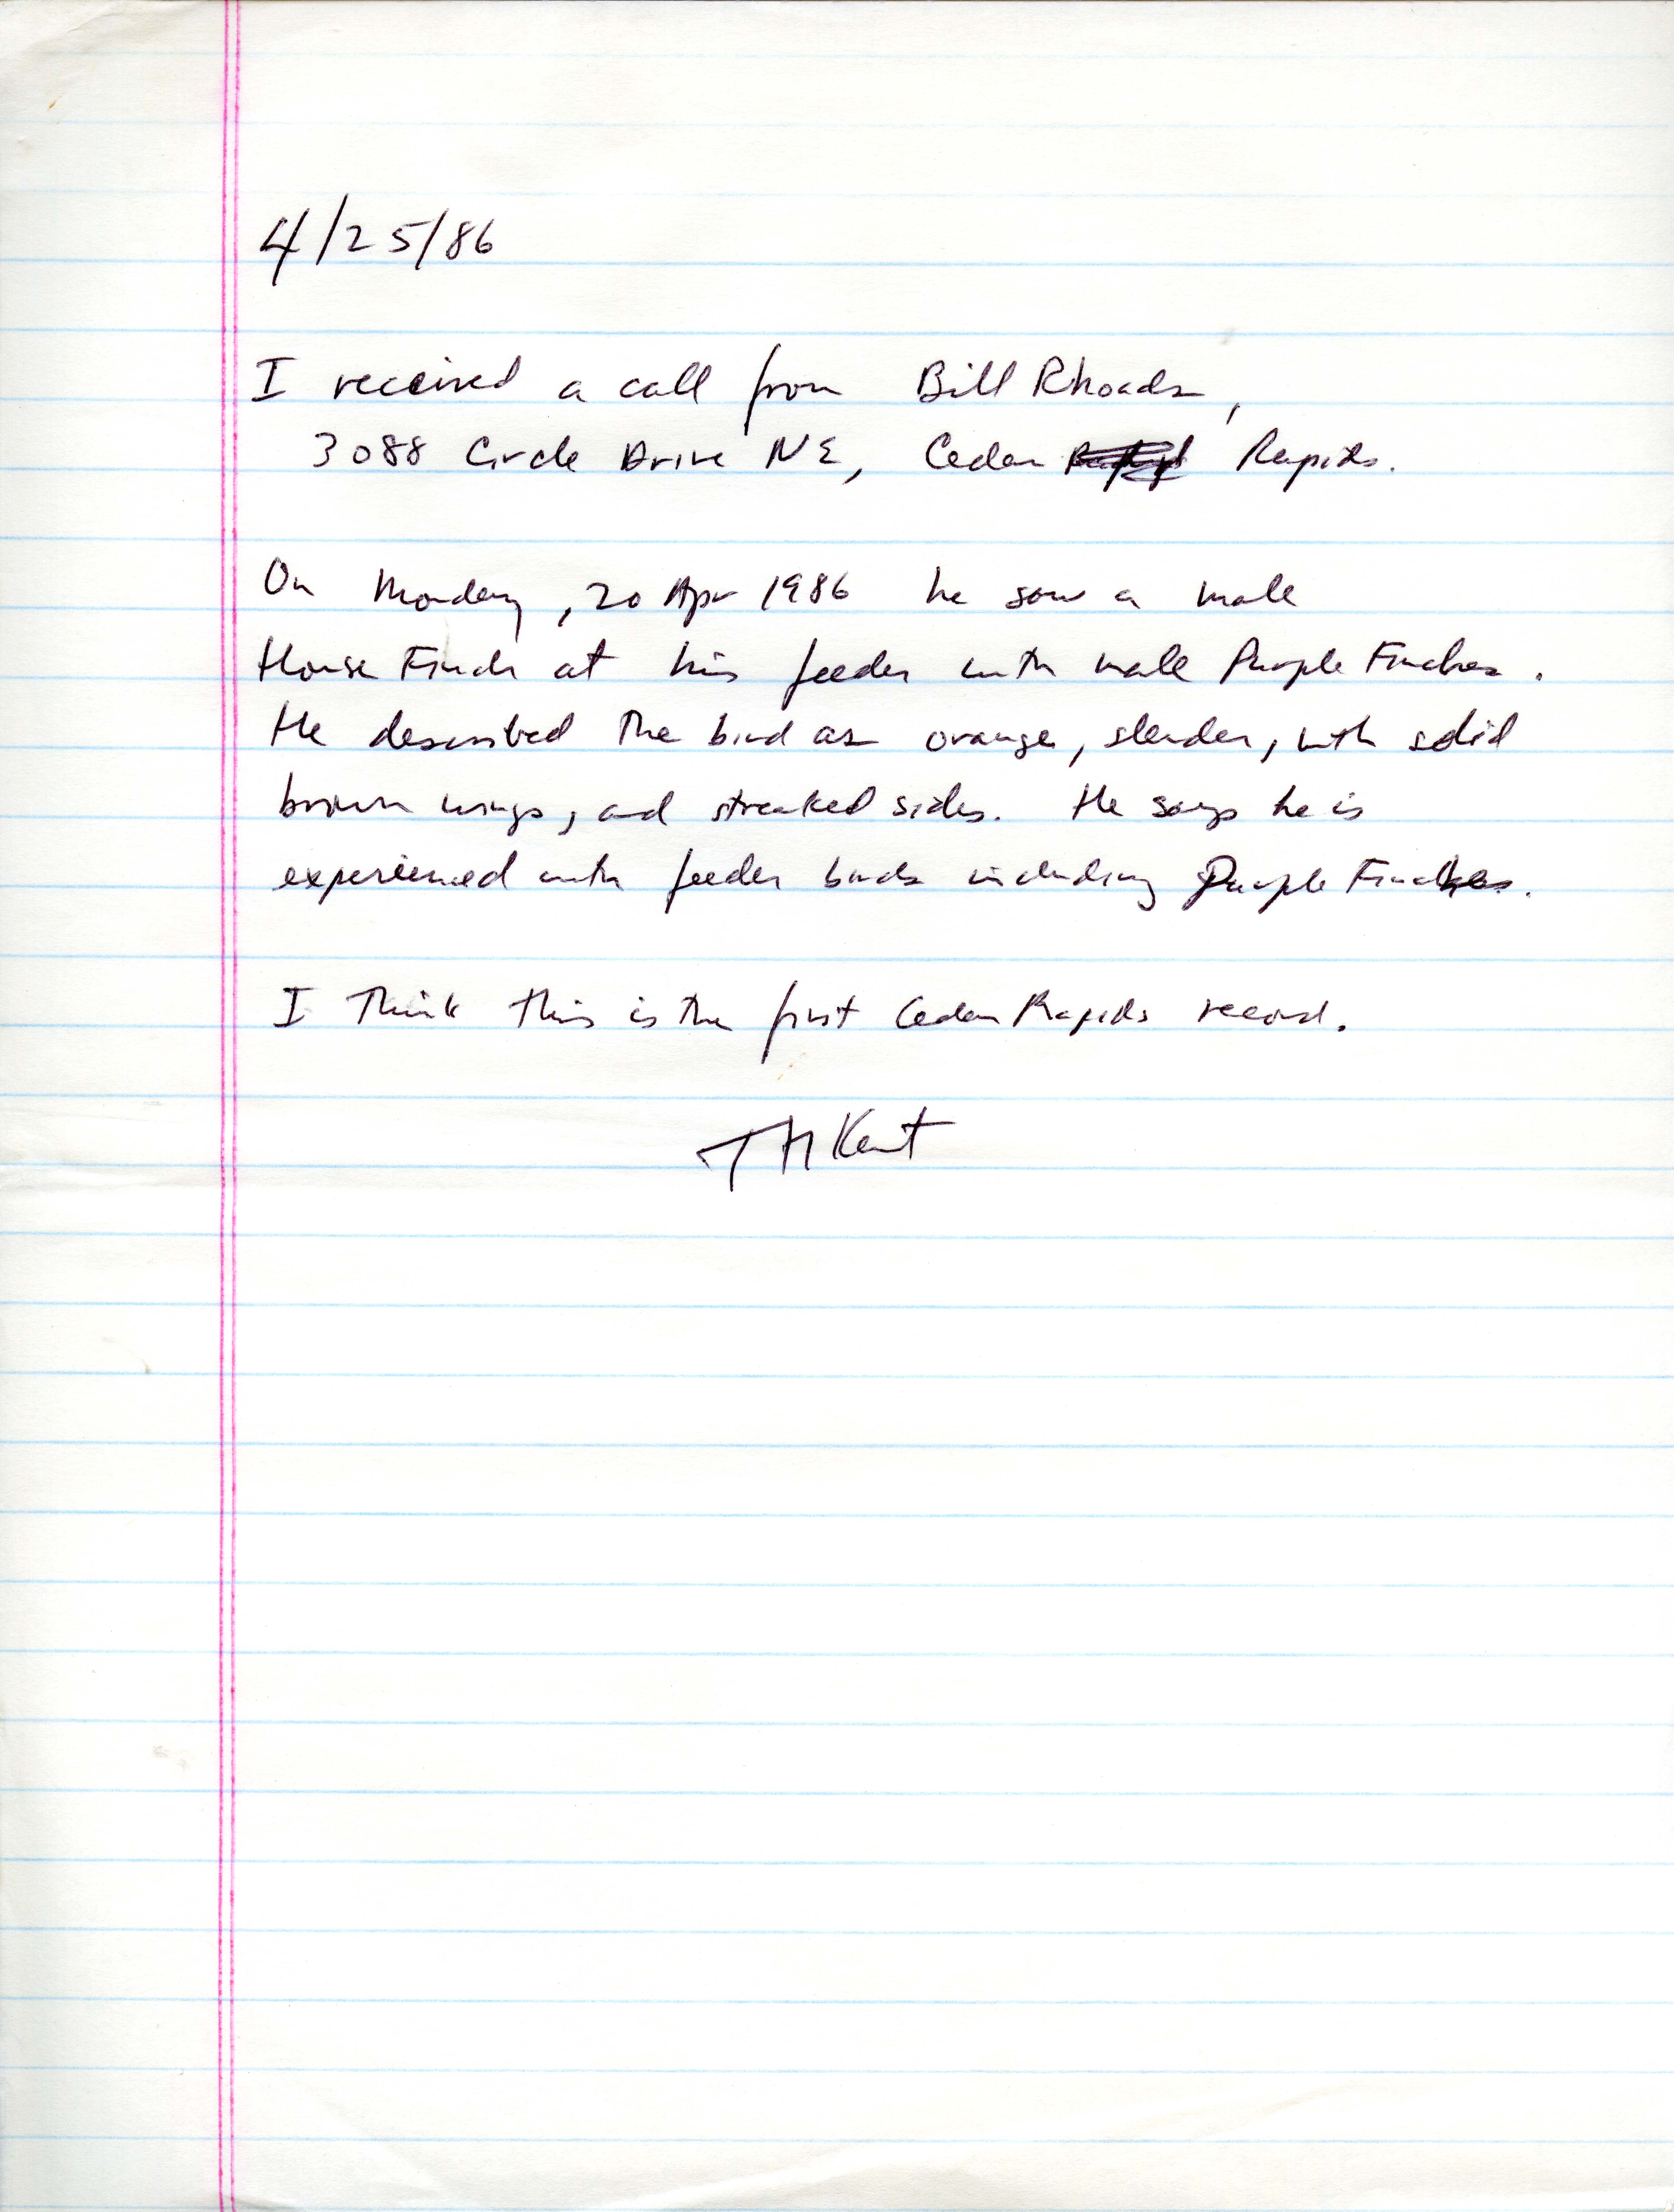 Thomas Kent note regarding phone call from Bill Rhoads, April 25, 1986